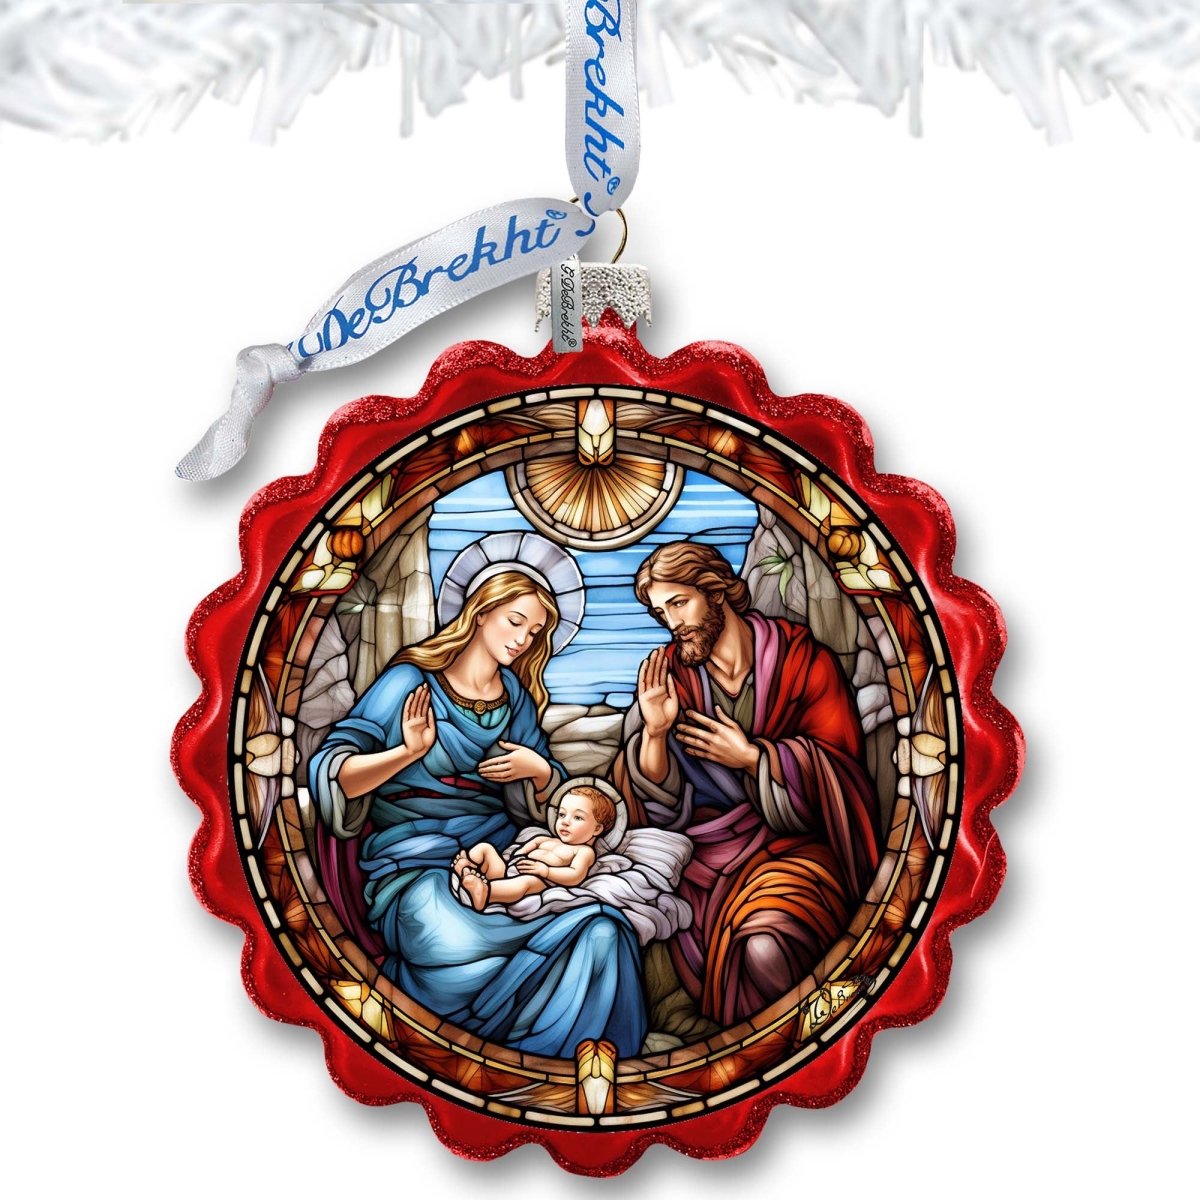 Designocracy 759-056 4 x 3 in. Sacred Beauty Classic Holy Family Nativity Wreath Glass Ornament Nativity Holiday Decor